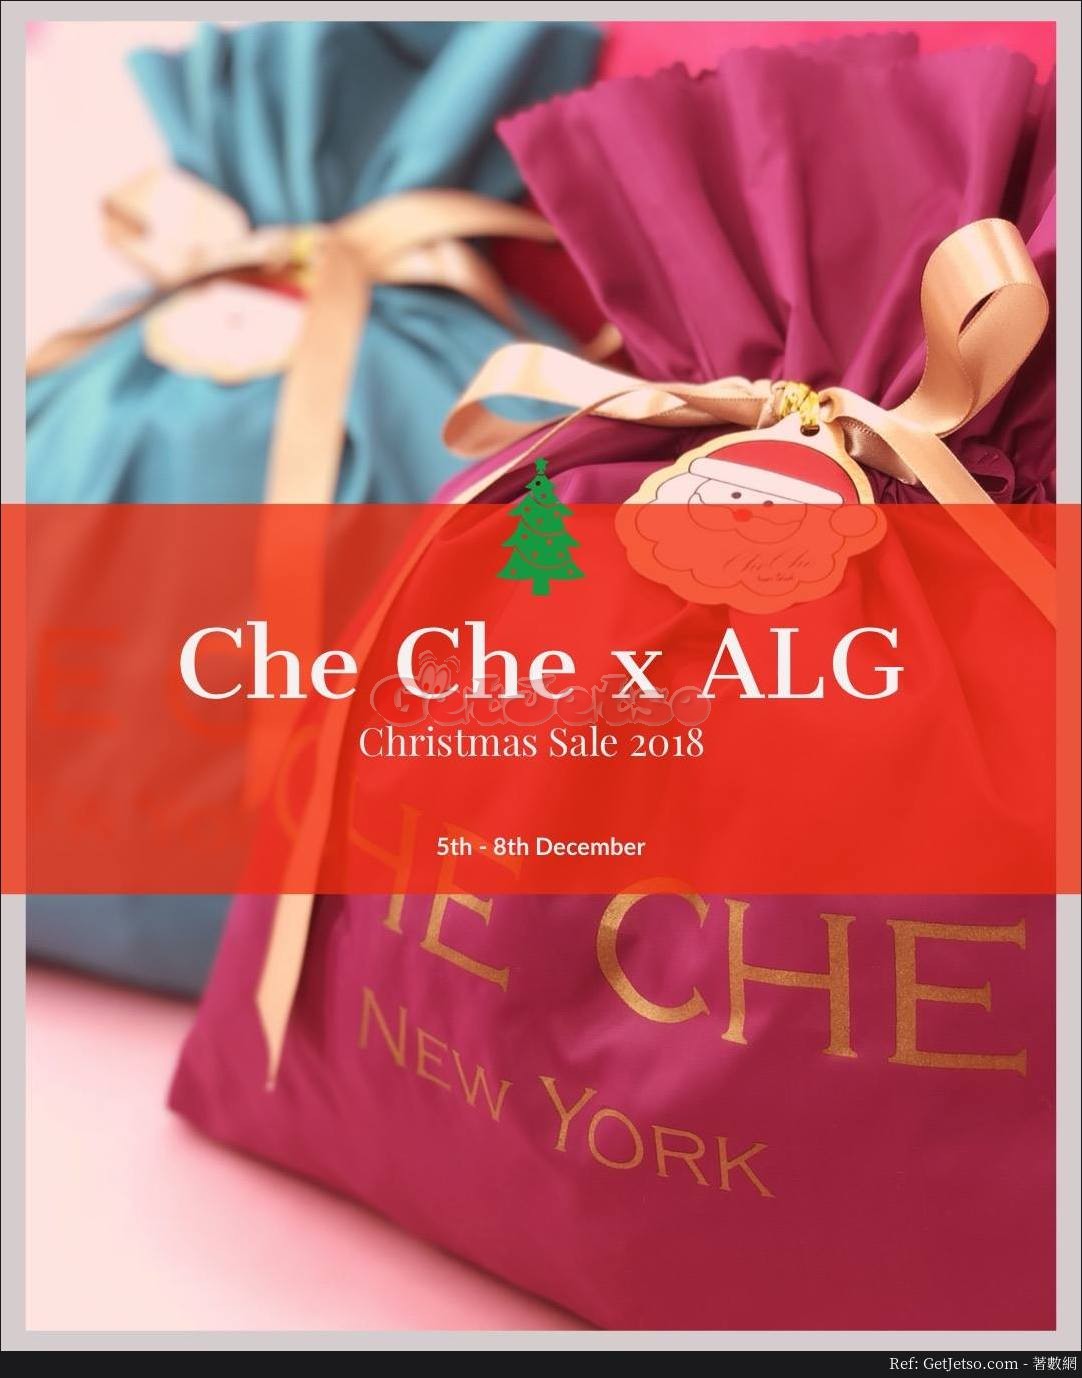 Che Che New York 低至聖誕禮品優惠(18年12月5-8日)圖片1